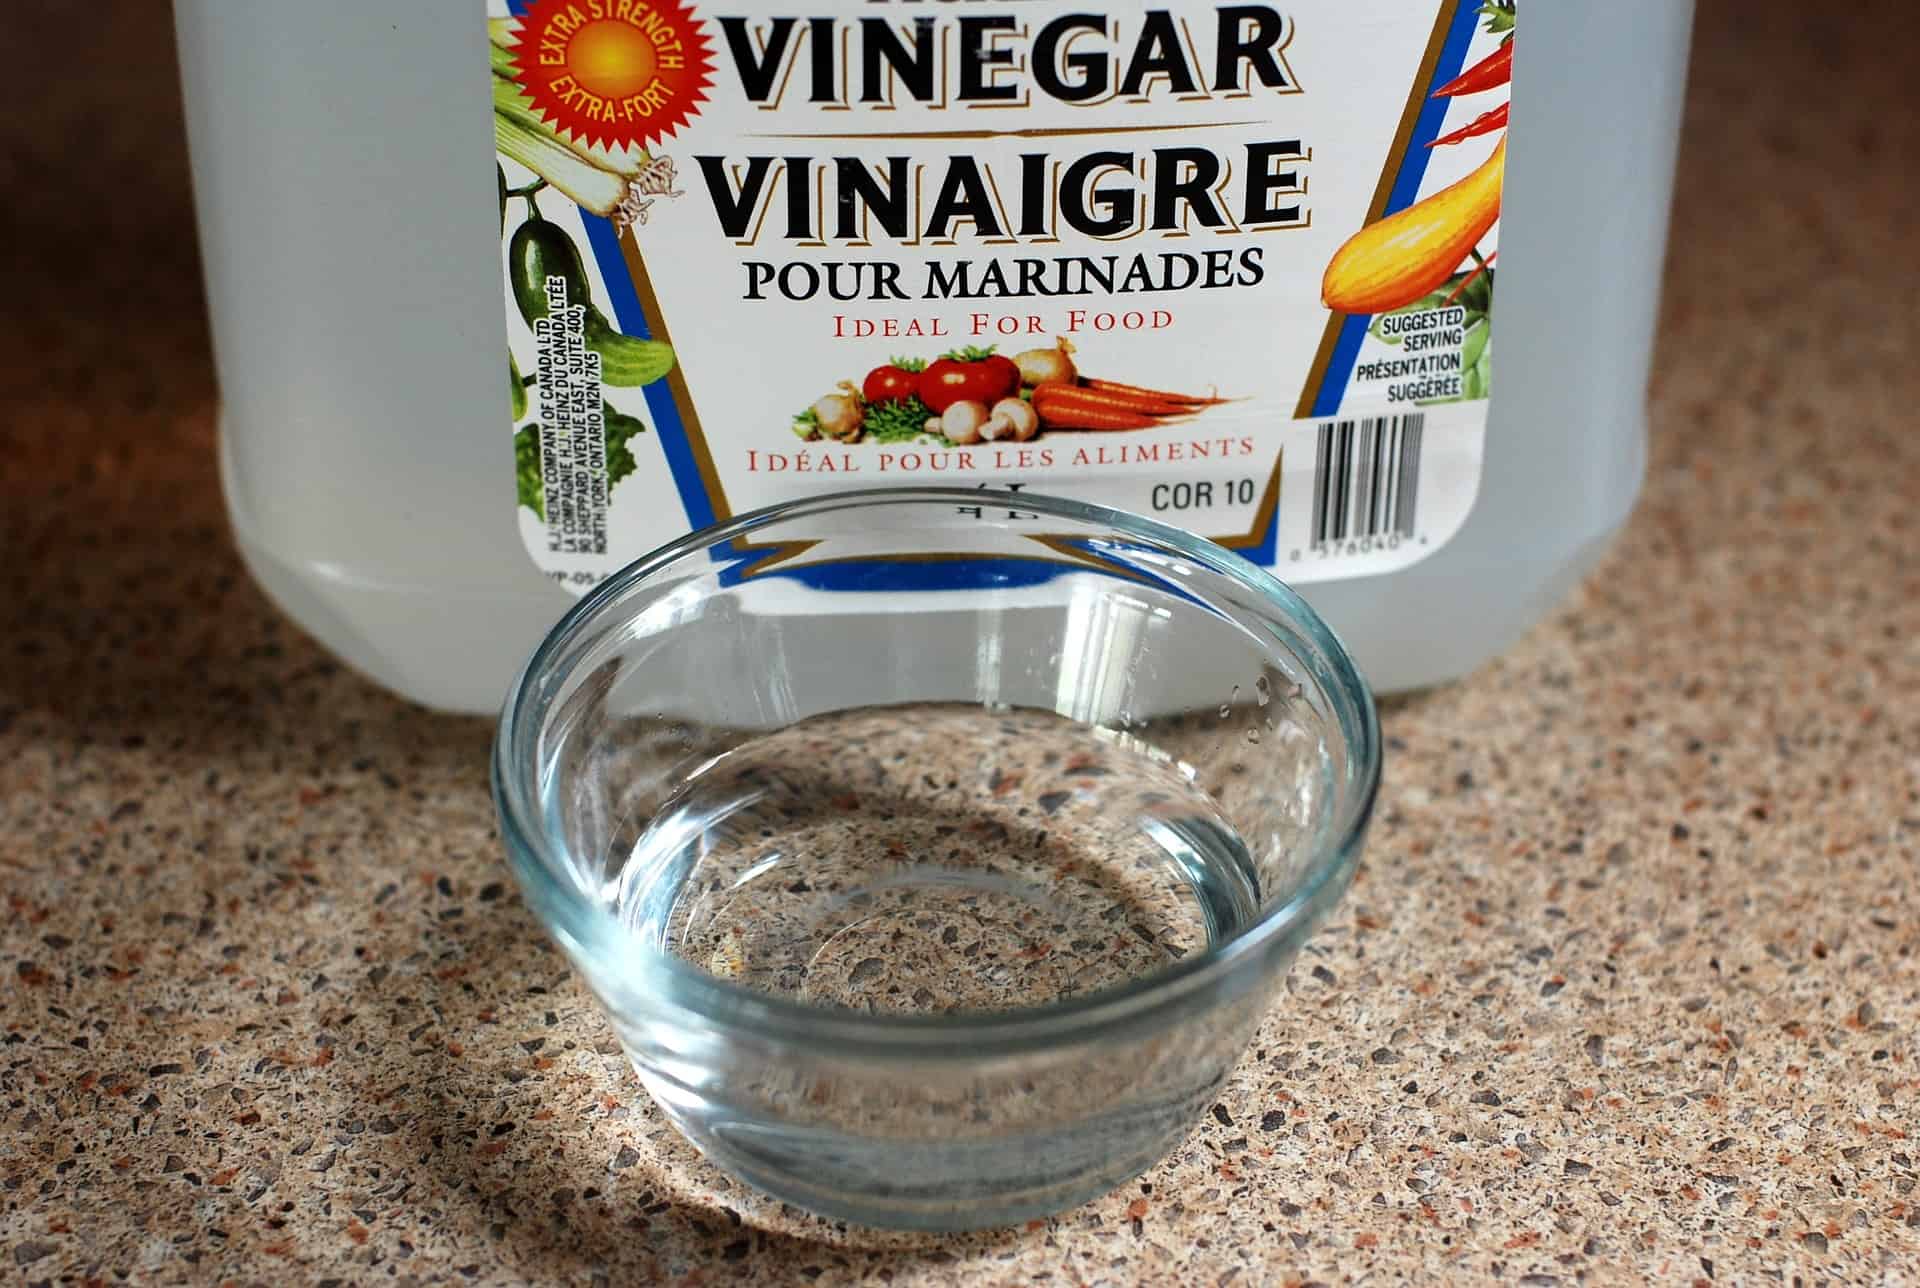 Vinegar Bowls - improve house smell